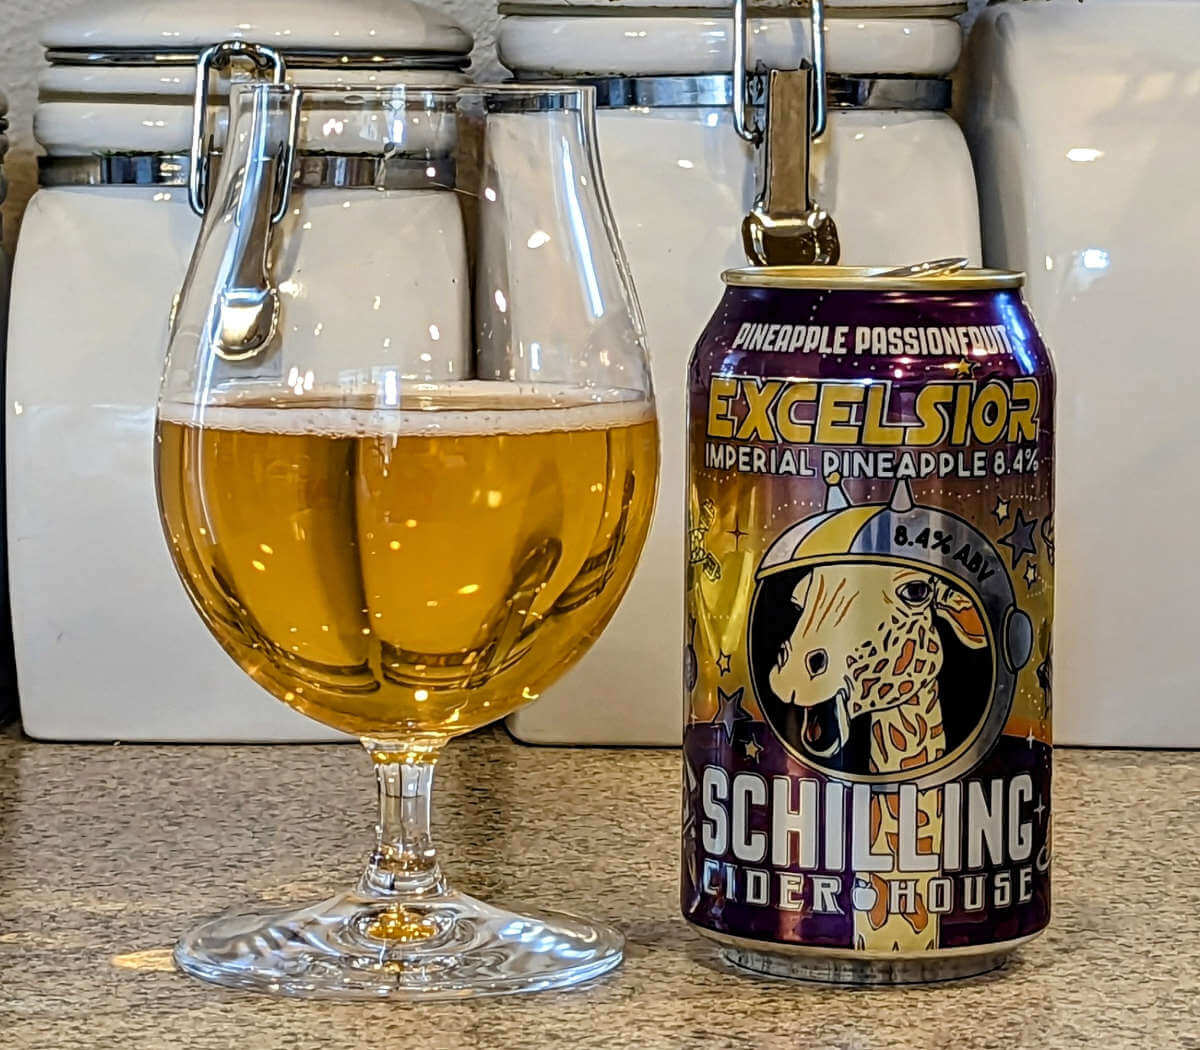 Schilling Cider Excelsior Imperial Pineapple Cider (Spaceport)